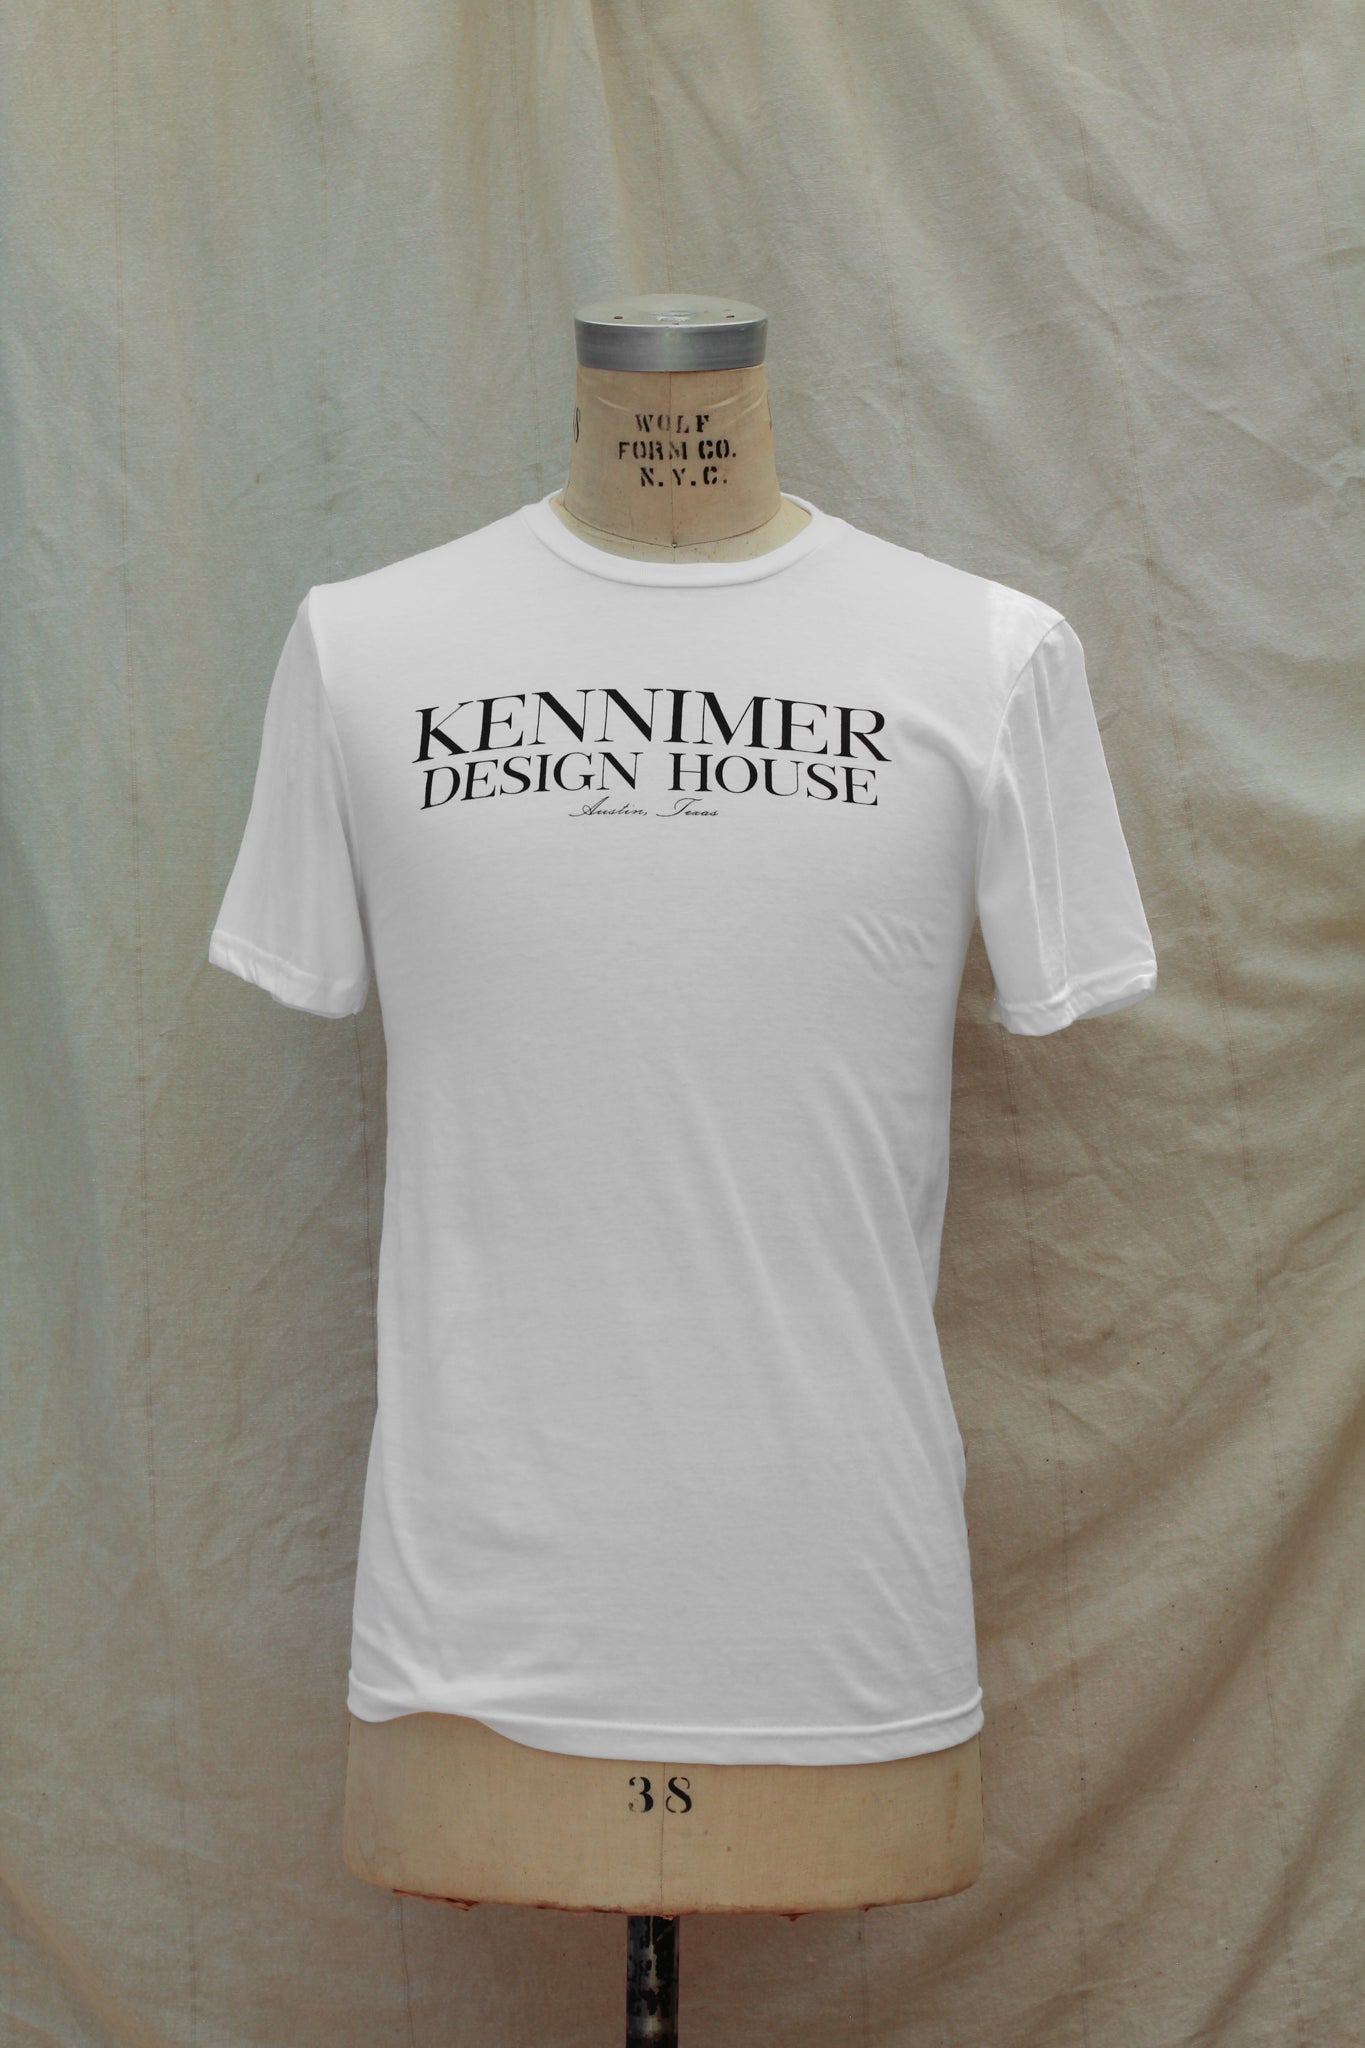 Kennimer Design House T-Shirt